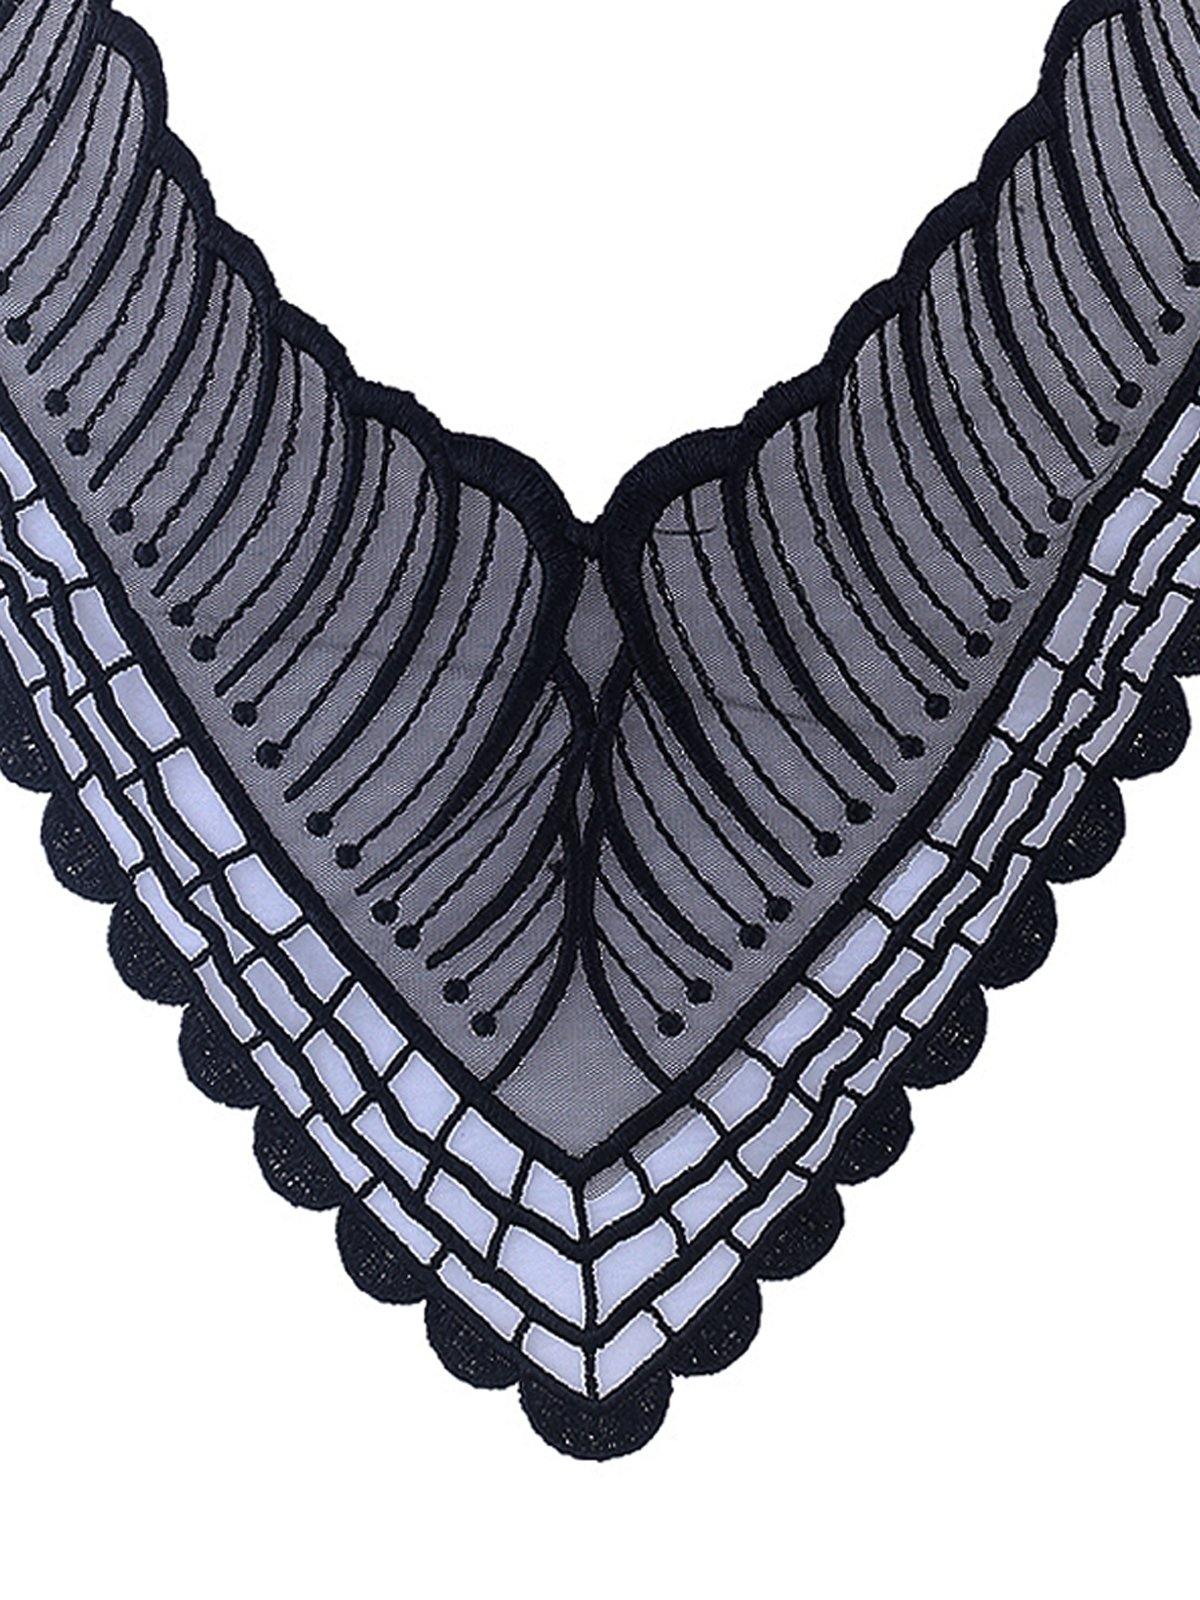 'V' Shape Black Embroidery Neck - Jhonea Accessories